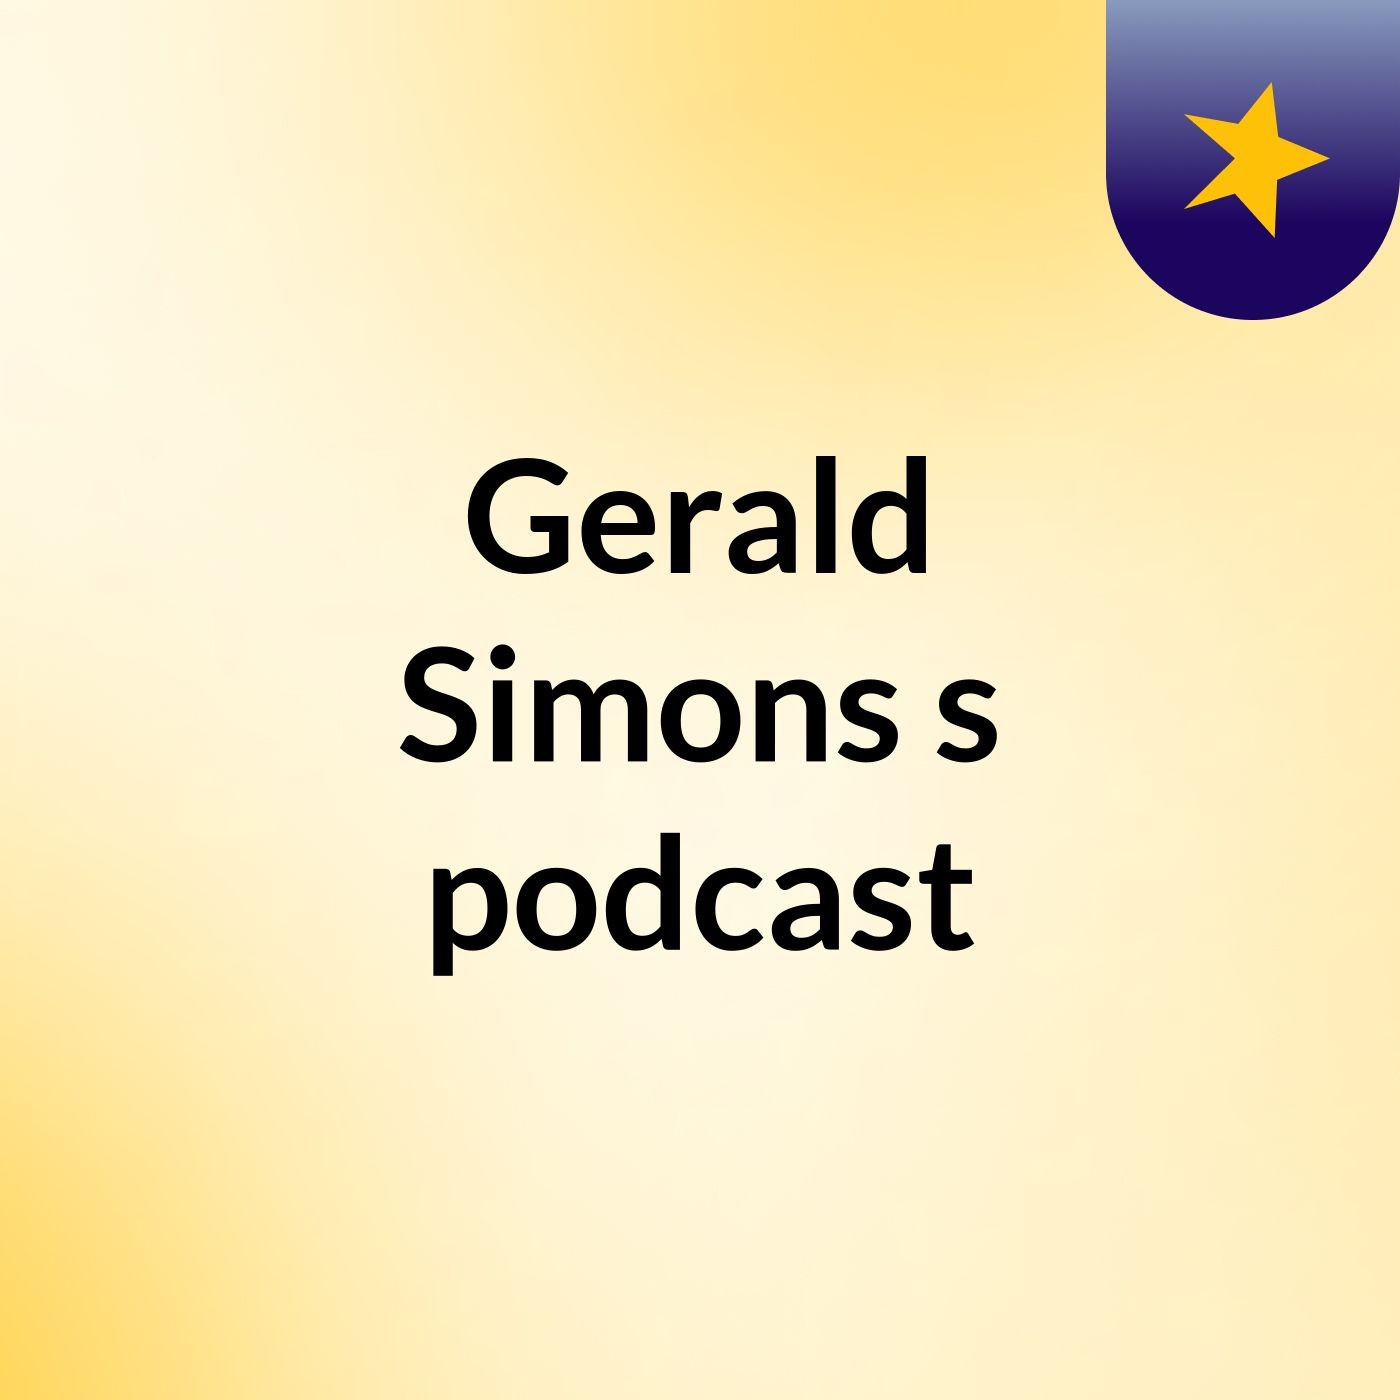 Gerald Simons's podcast